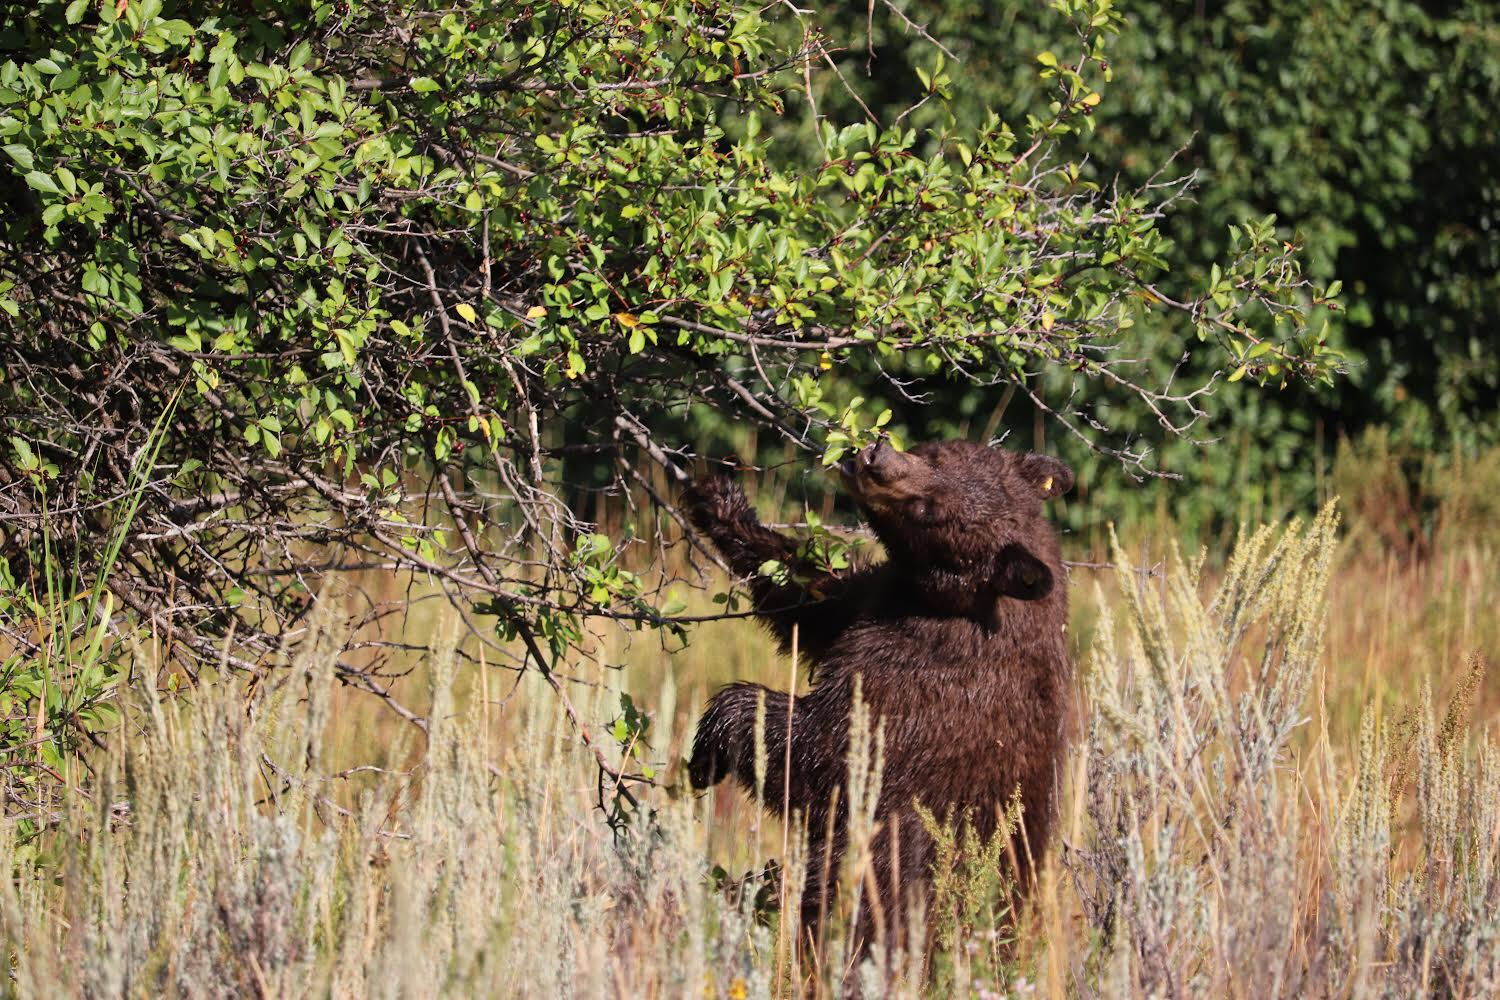 A bear eats berries off of a bush.